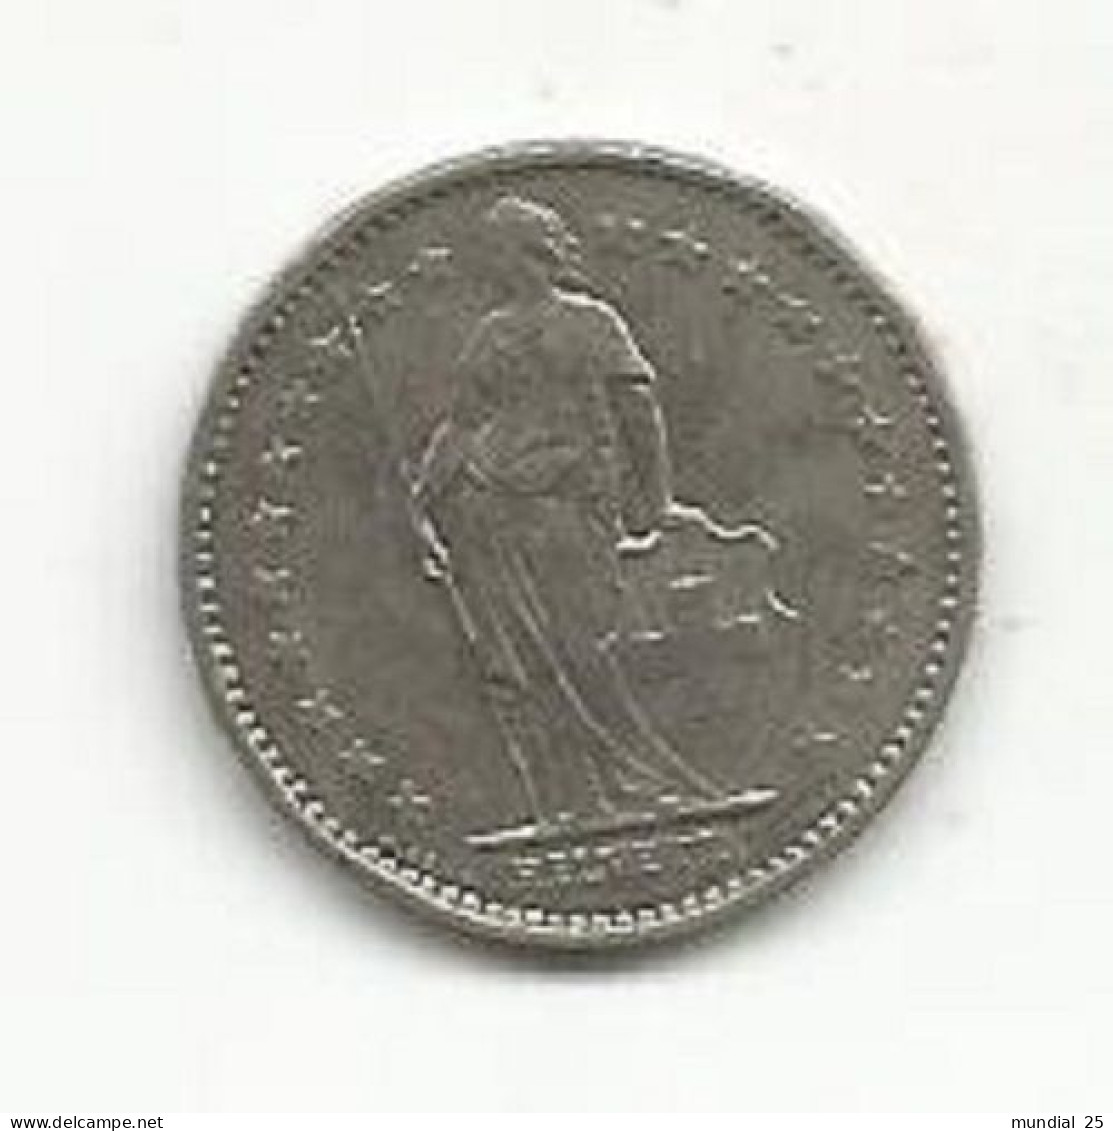 SWITZERLAND 1/2 FRANC 1981 - 1/2 Franken